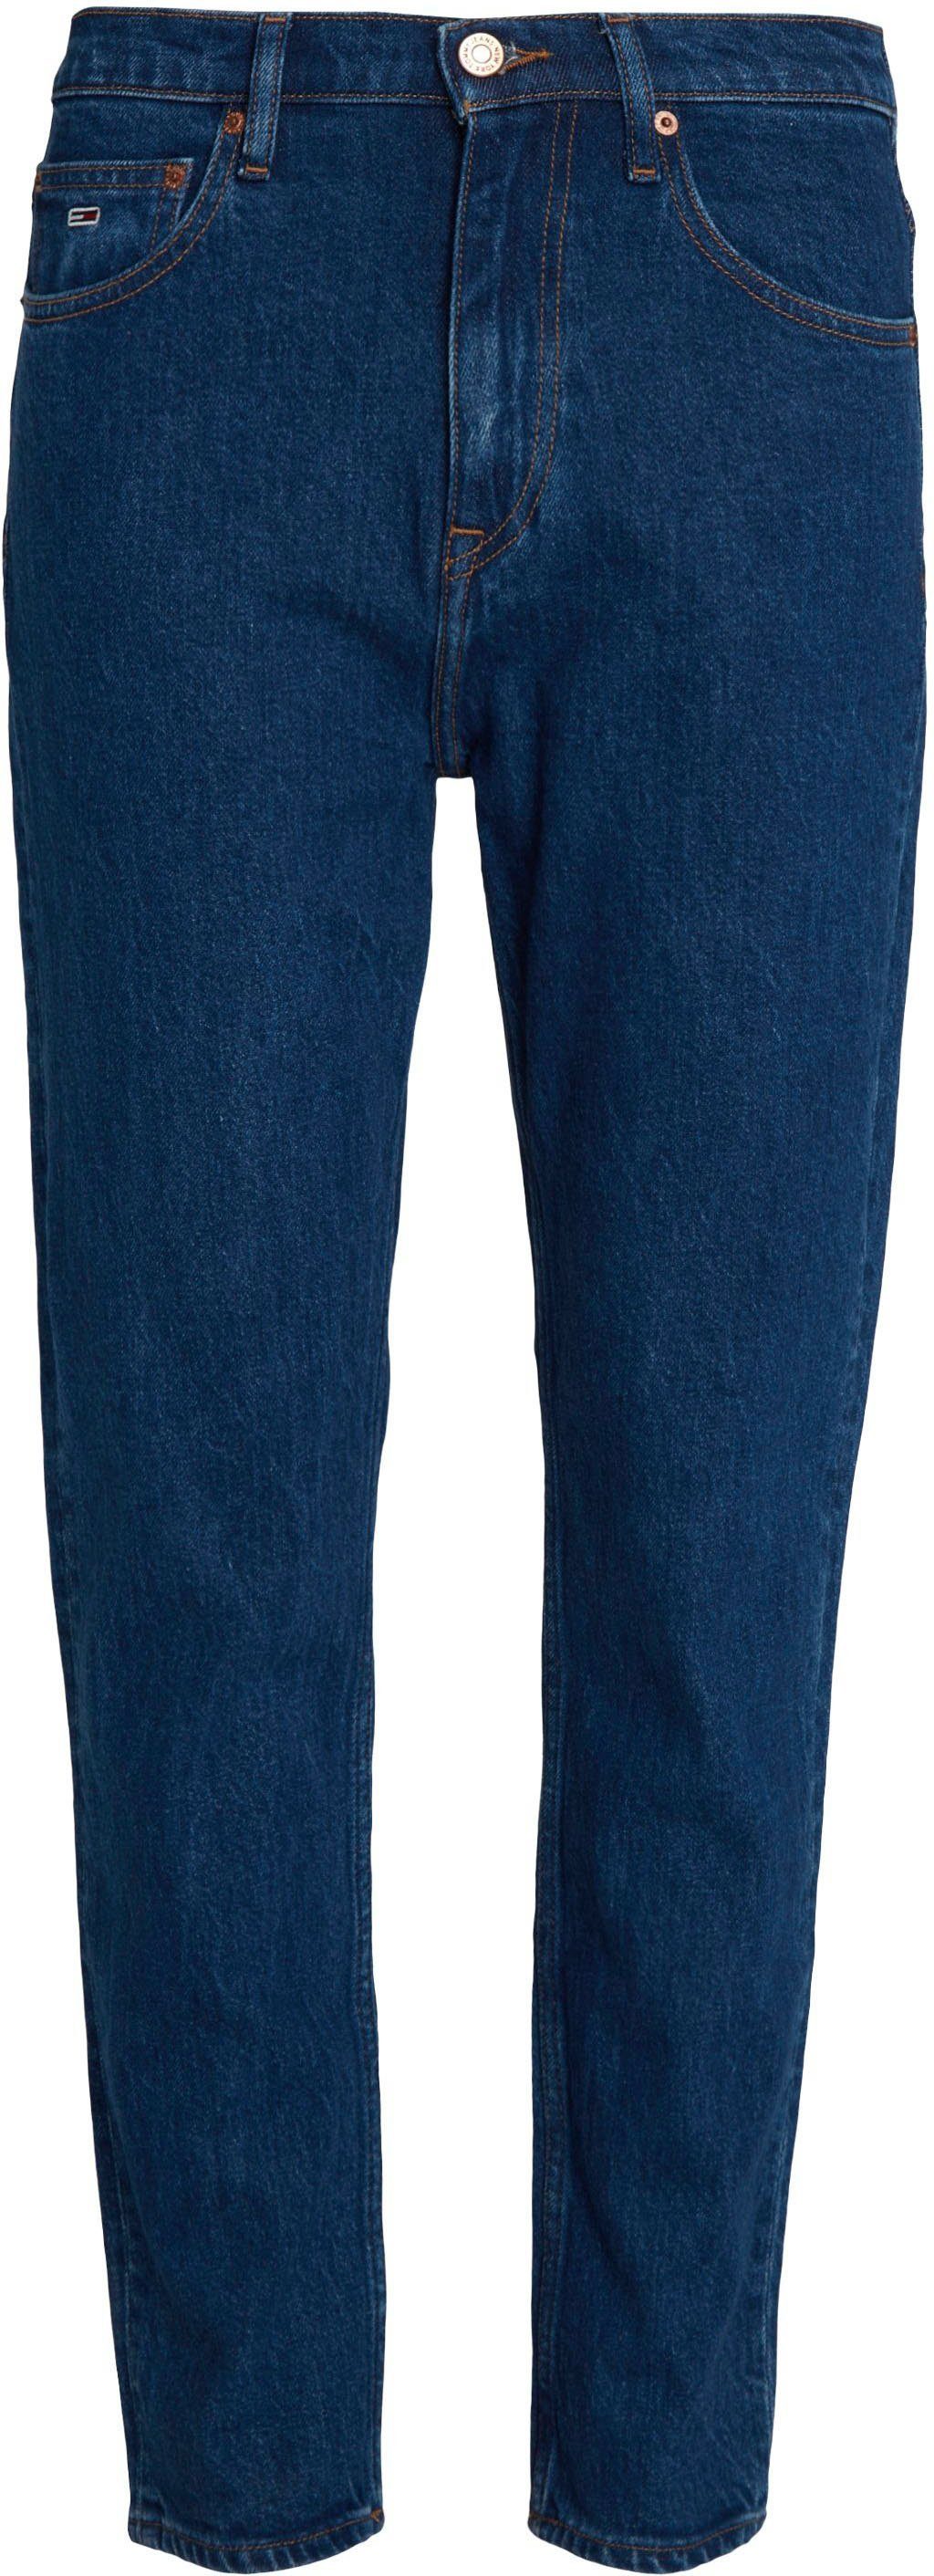 HGH Ledermarkenlabel dark Tommy IZZIE SL blue30 ANK BH5131 Slim-fit-Jeans Jeans mit